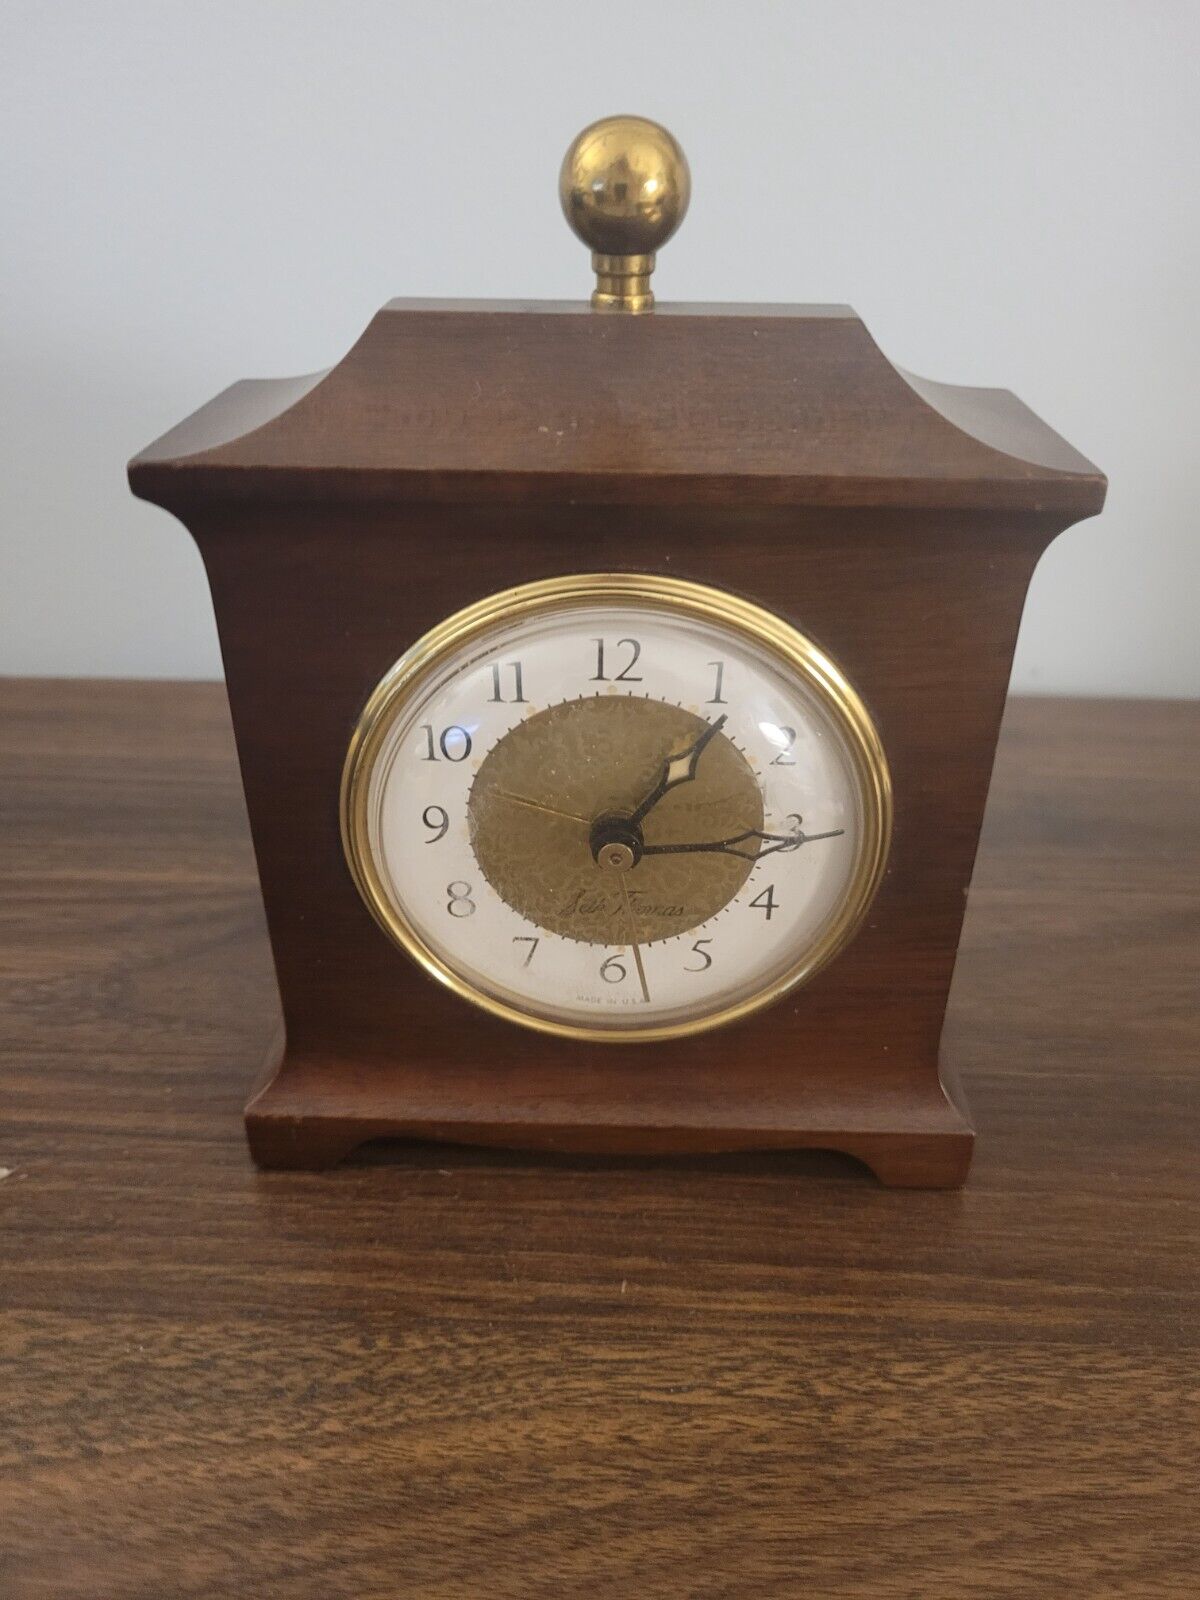 Vintage Seth Thomas SS12-0 Mantle Electric Wooden Alarm Clock (Works)